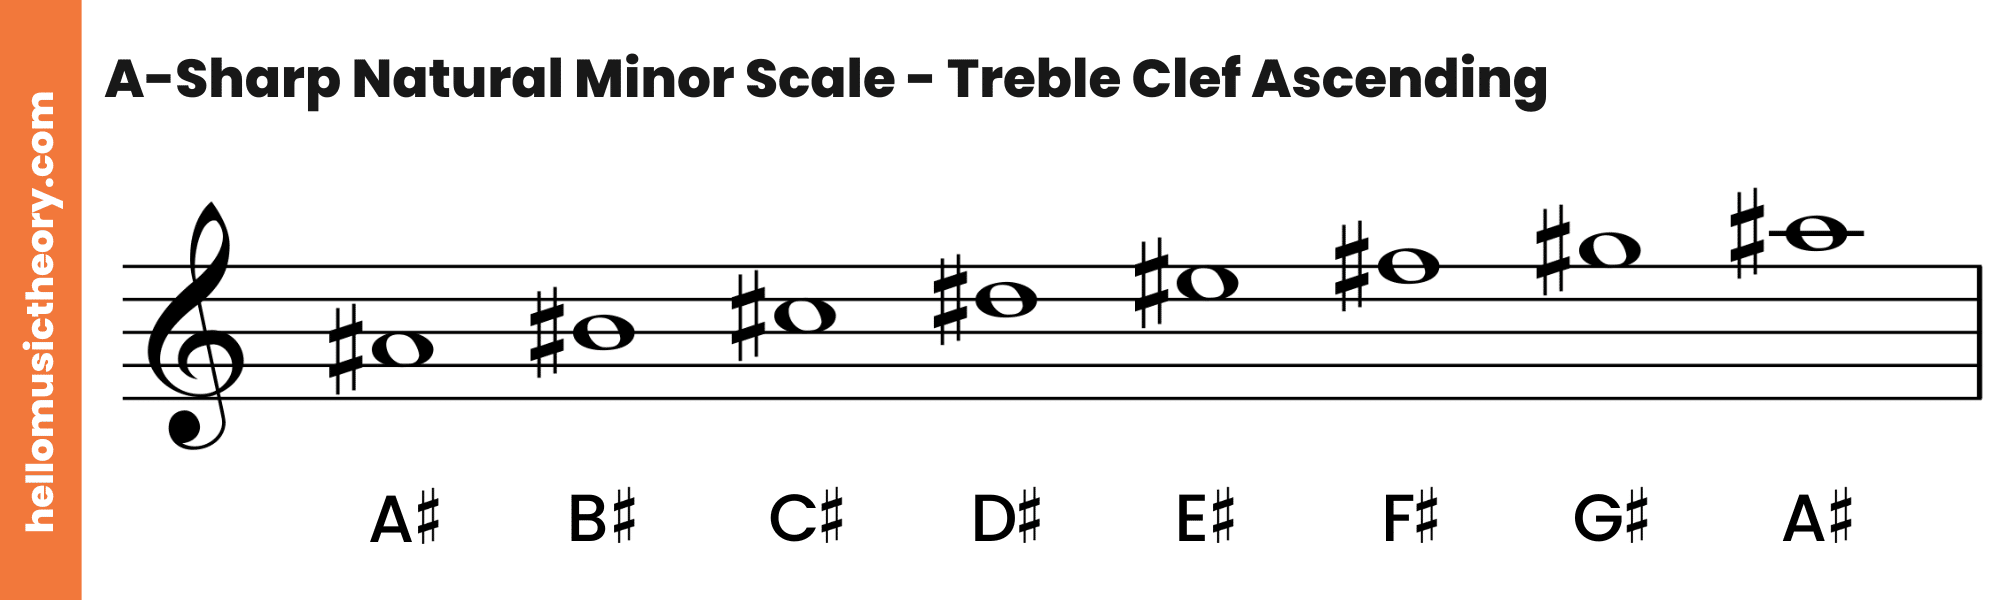 A-Sharp-Natural-Minor-Scale-Treble-Clef-Ascending